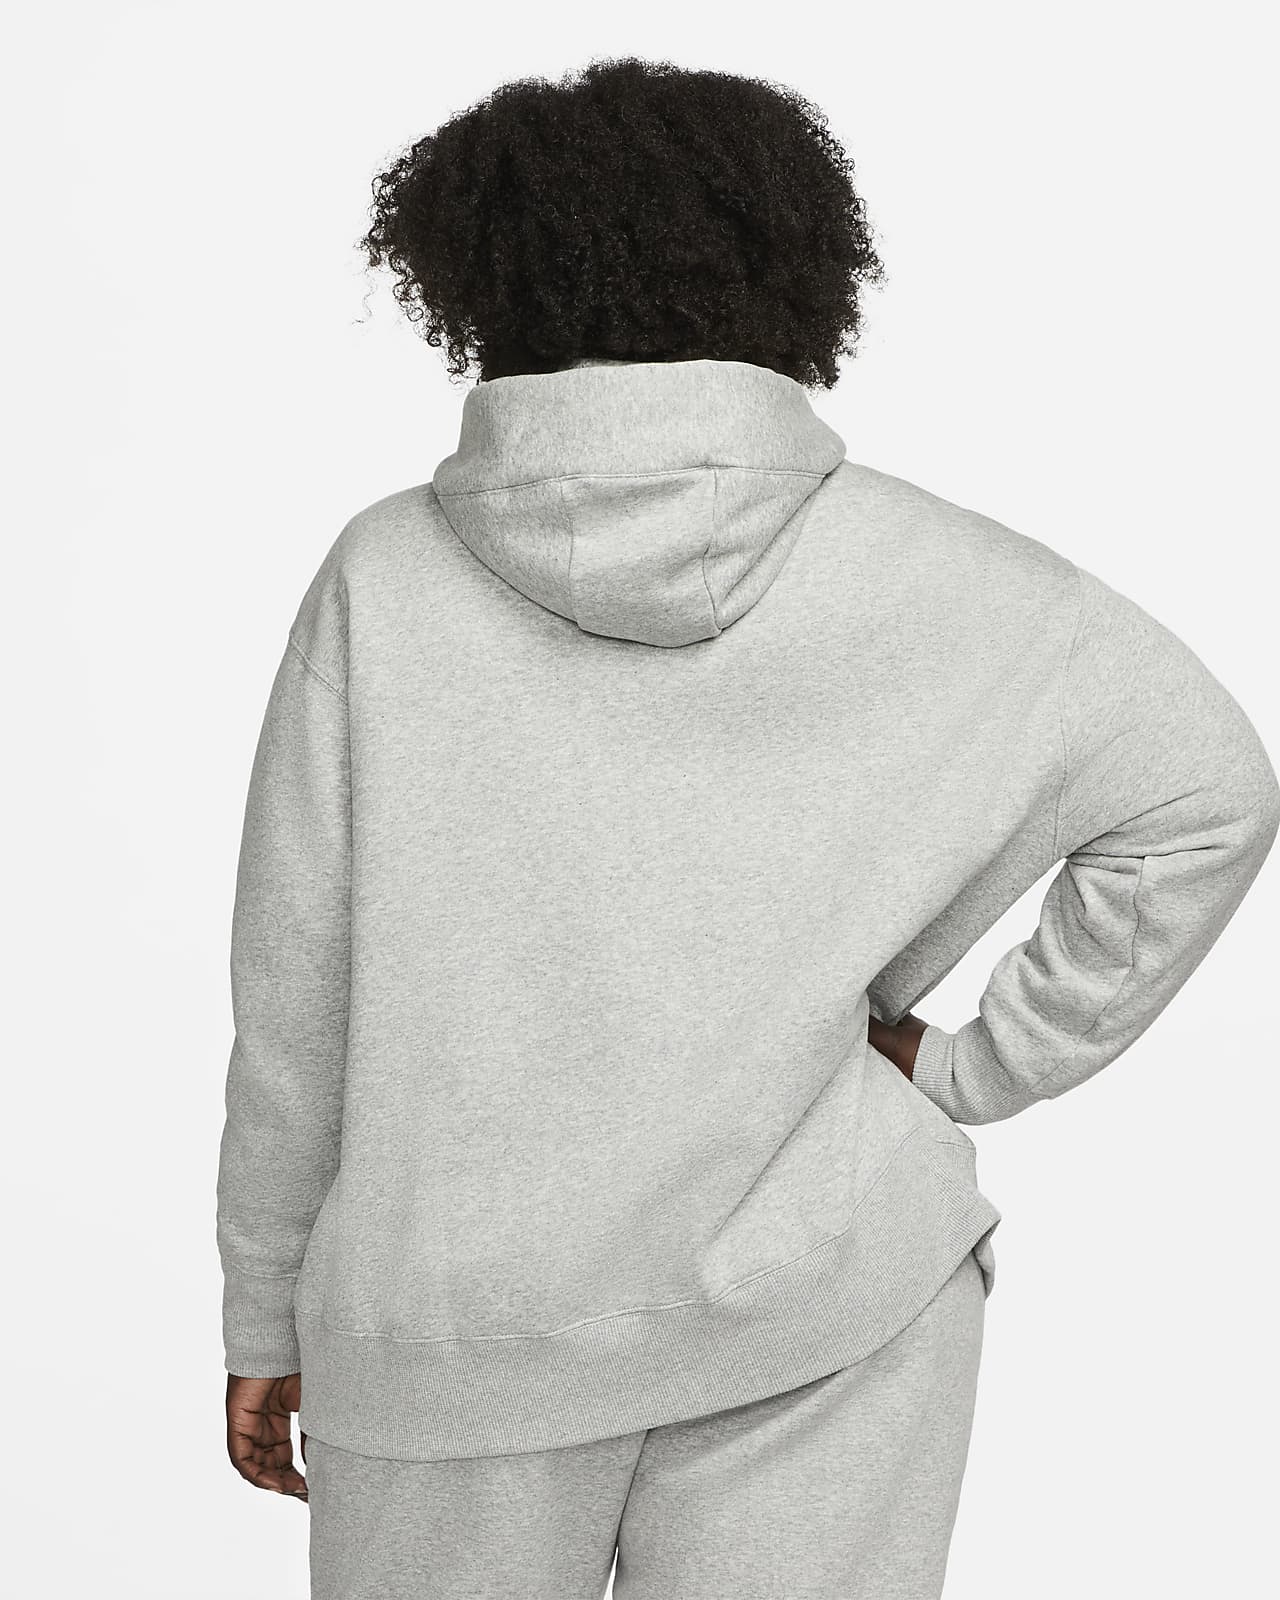 Nike Collection Fleece oversized hoodie in gray heather